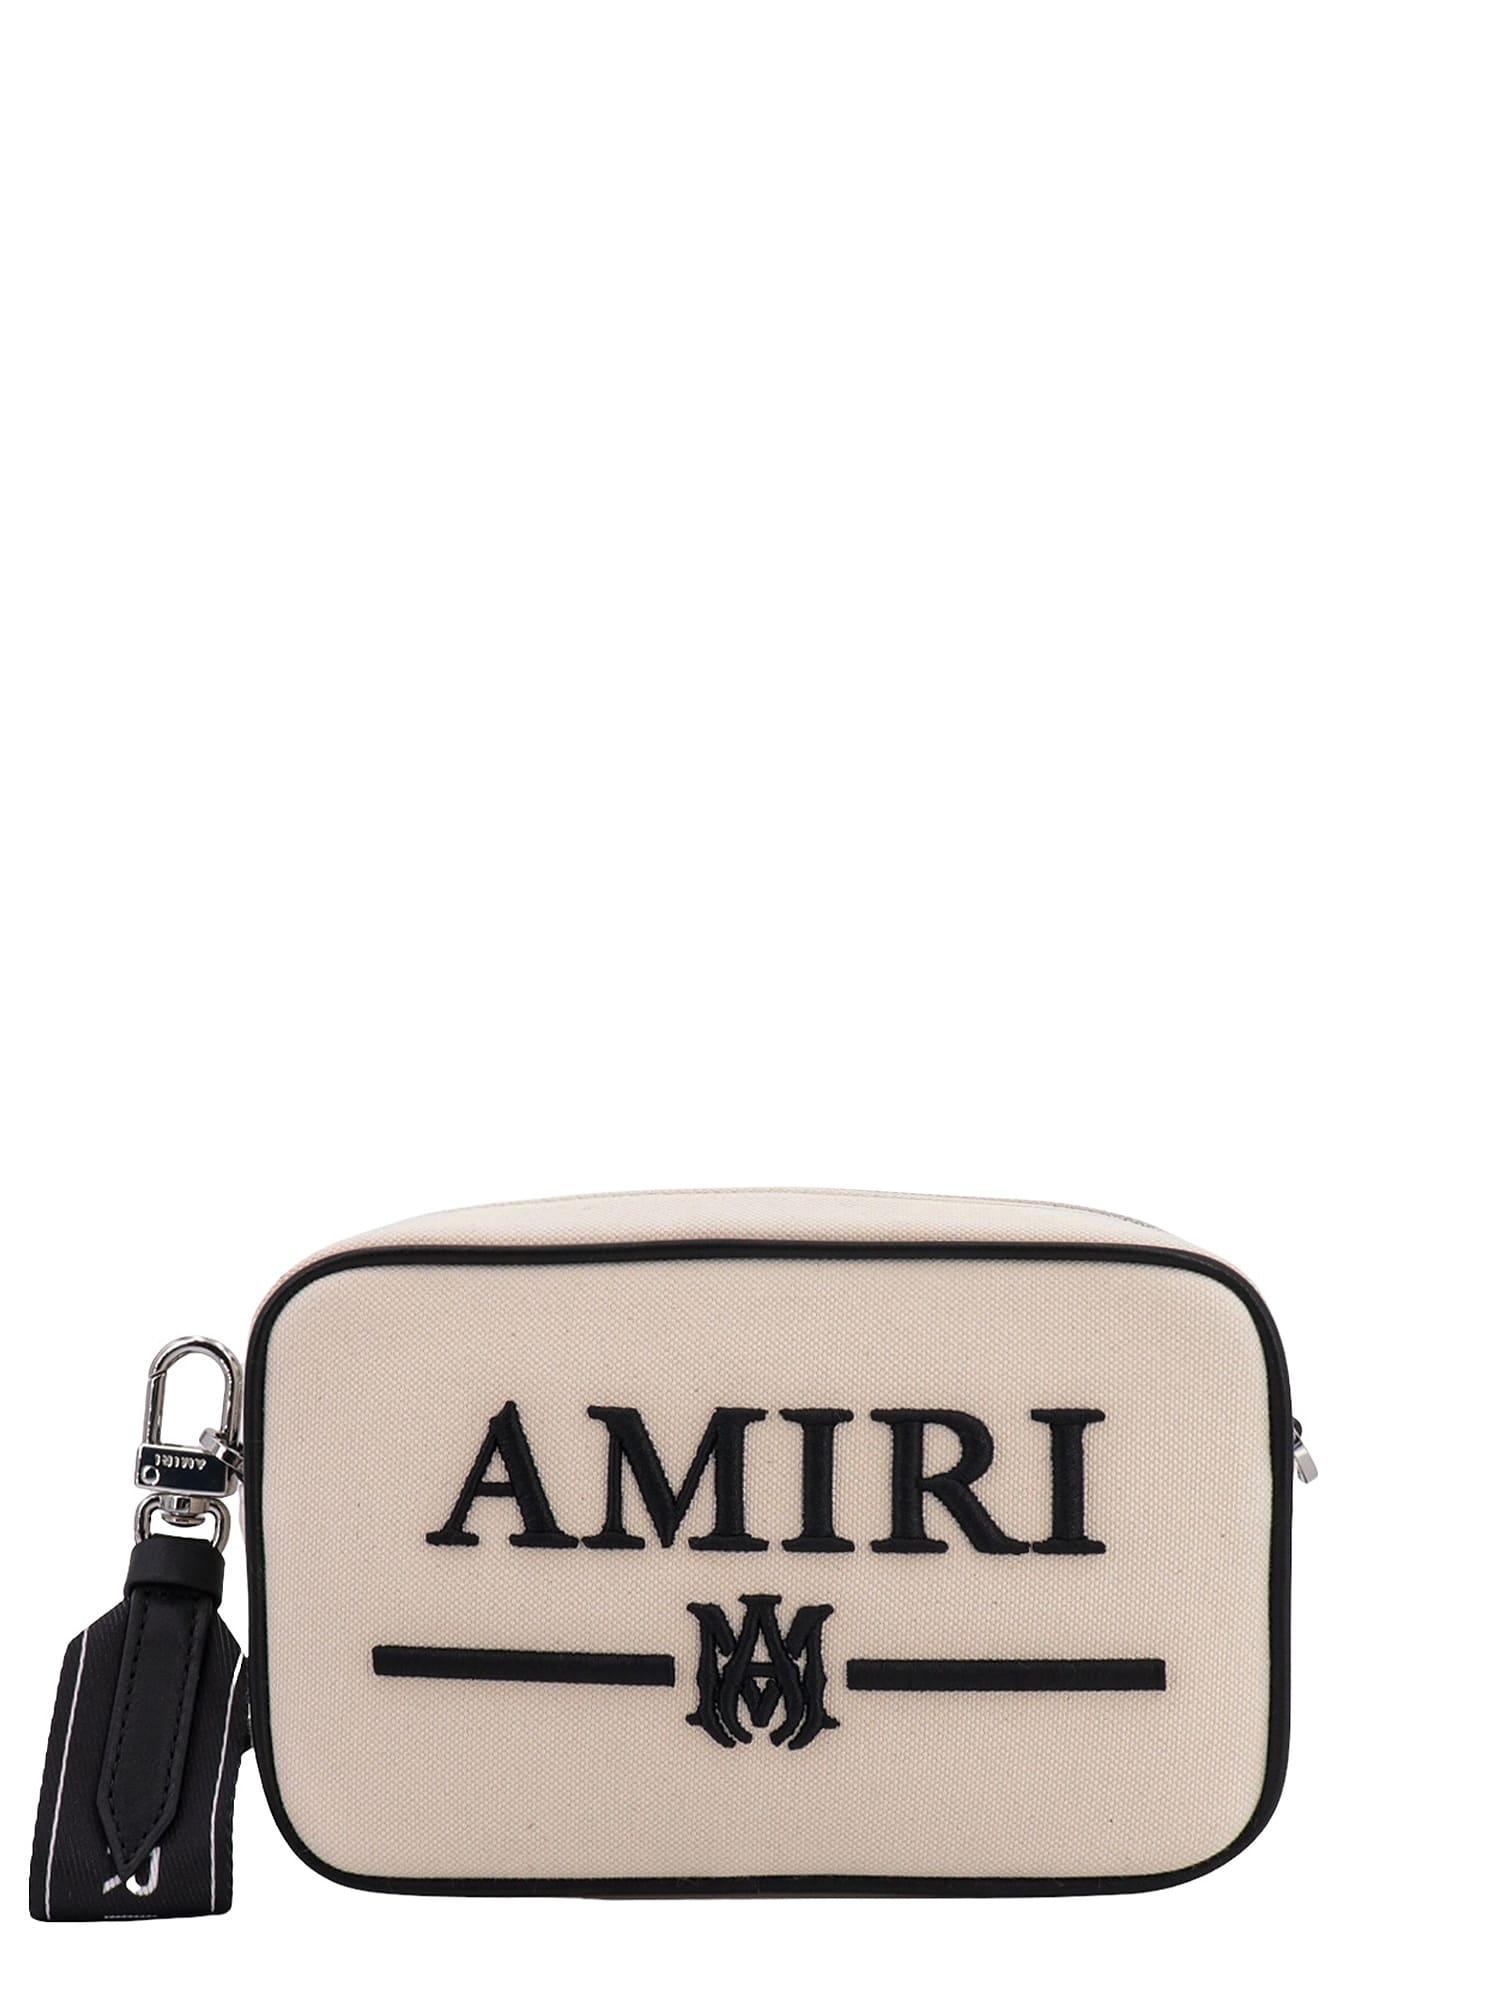 Amiri Shoulder Bag In Beige | ModeSens